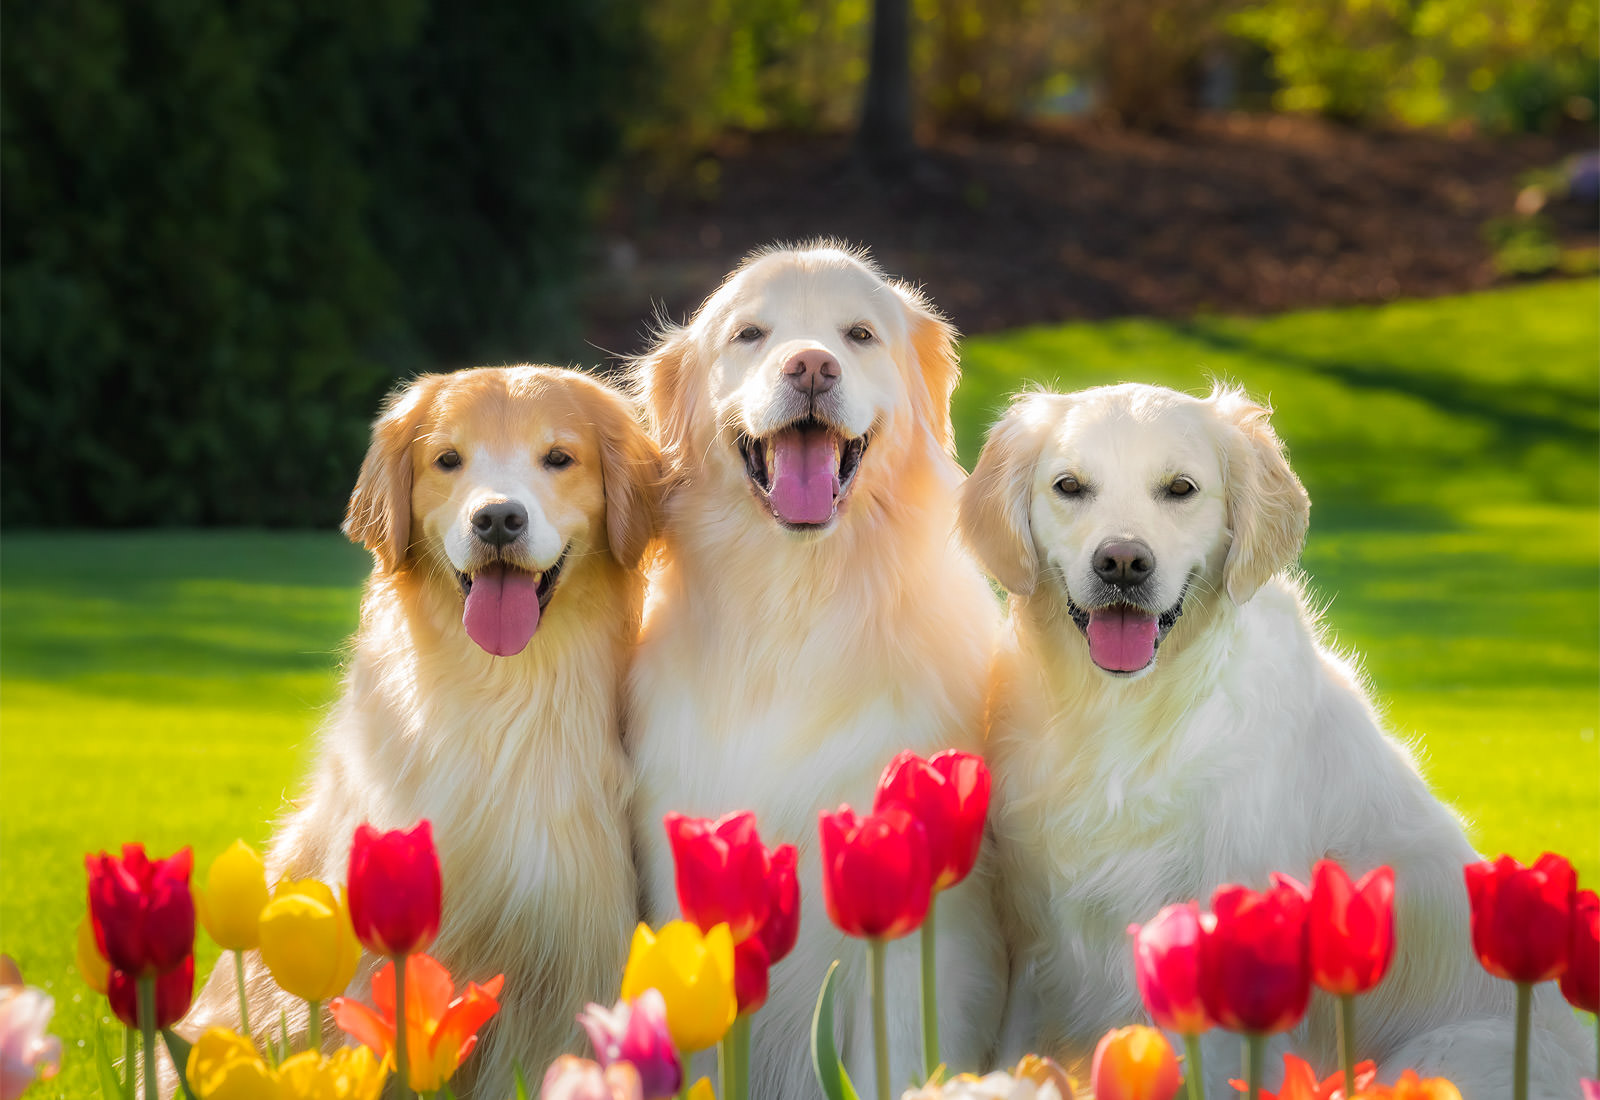 Three Golden Retrievers posing with the tulips